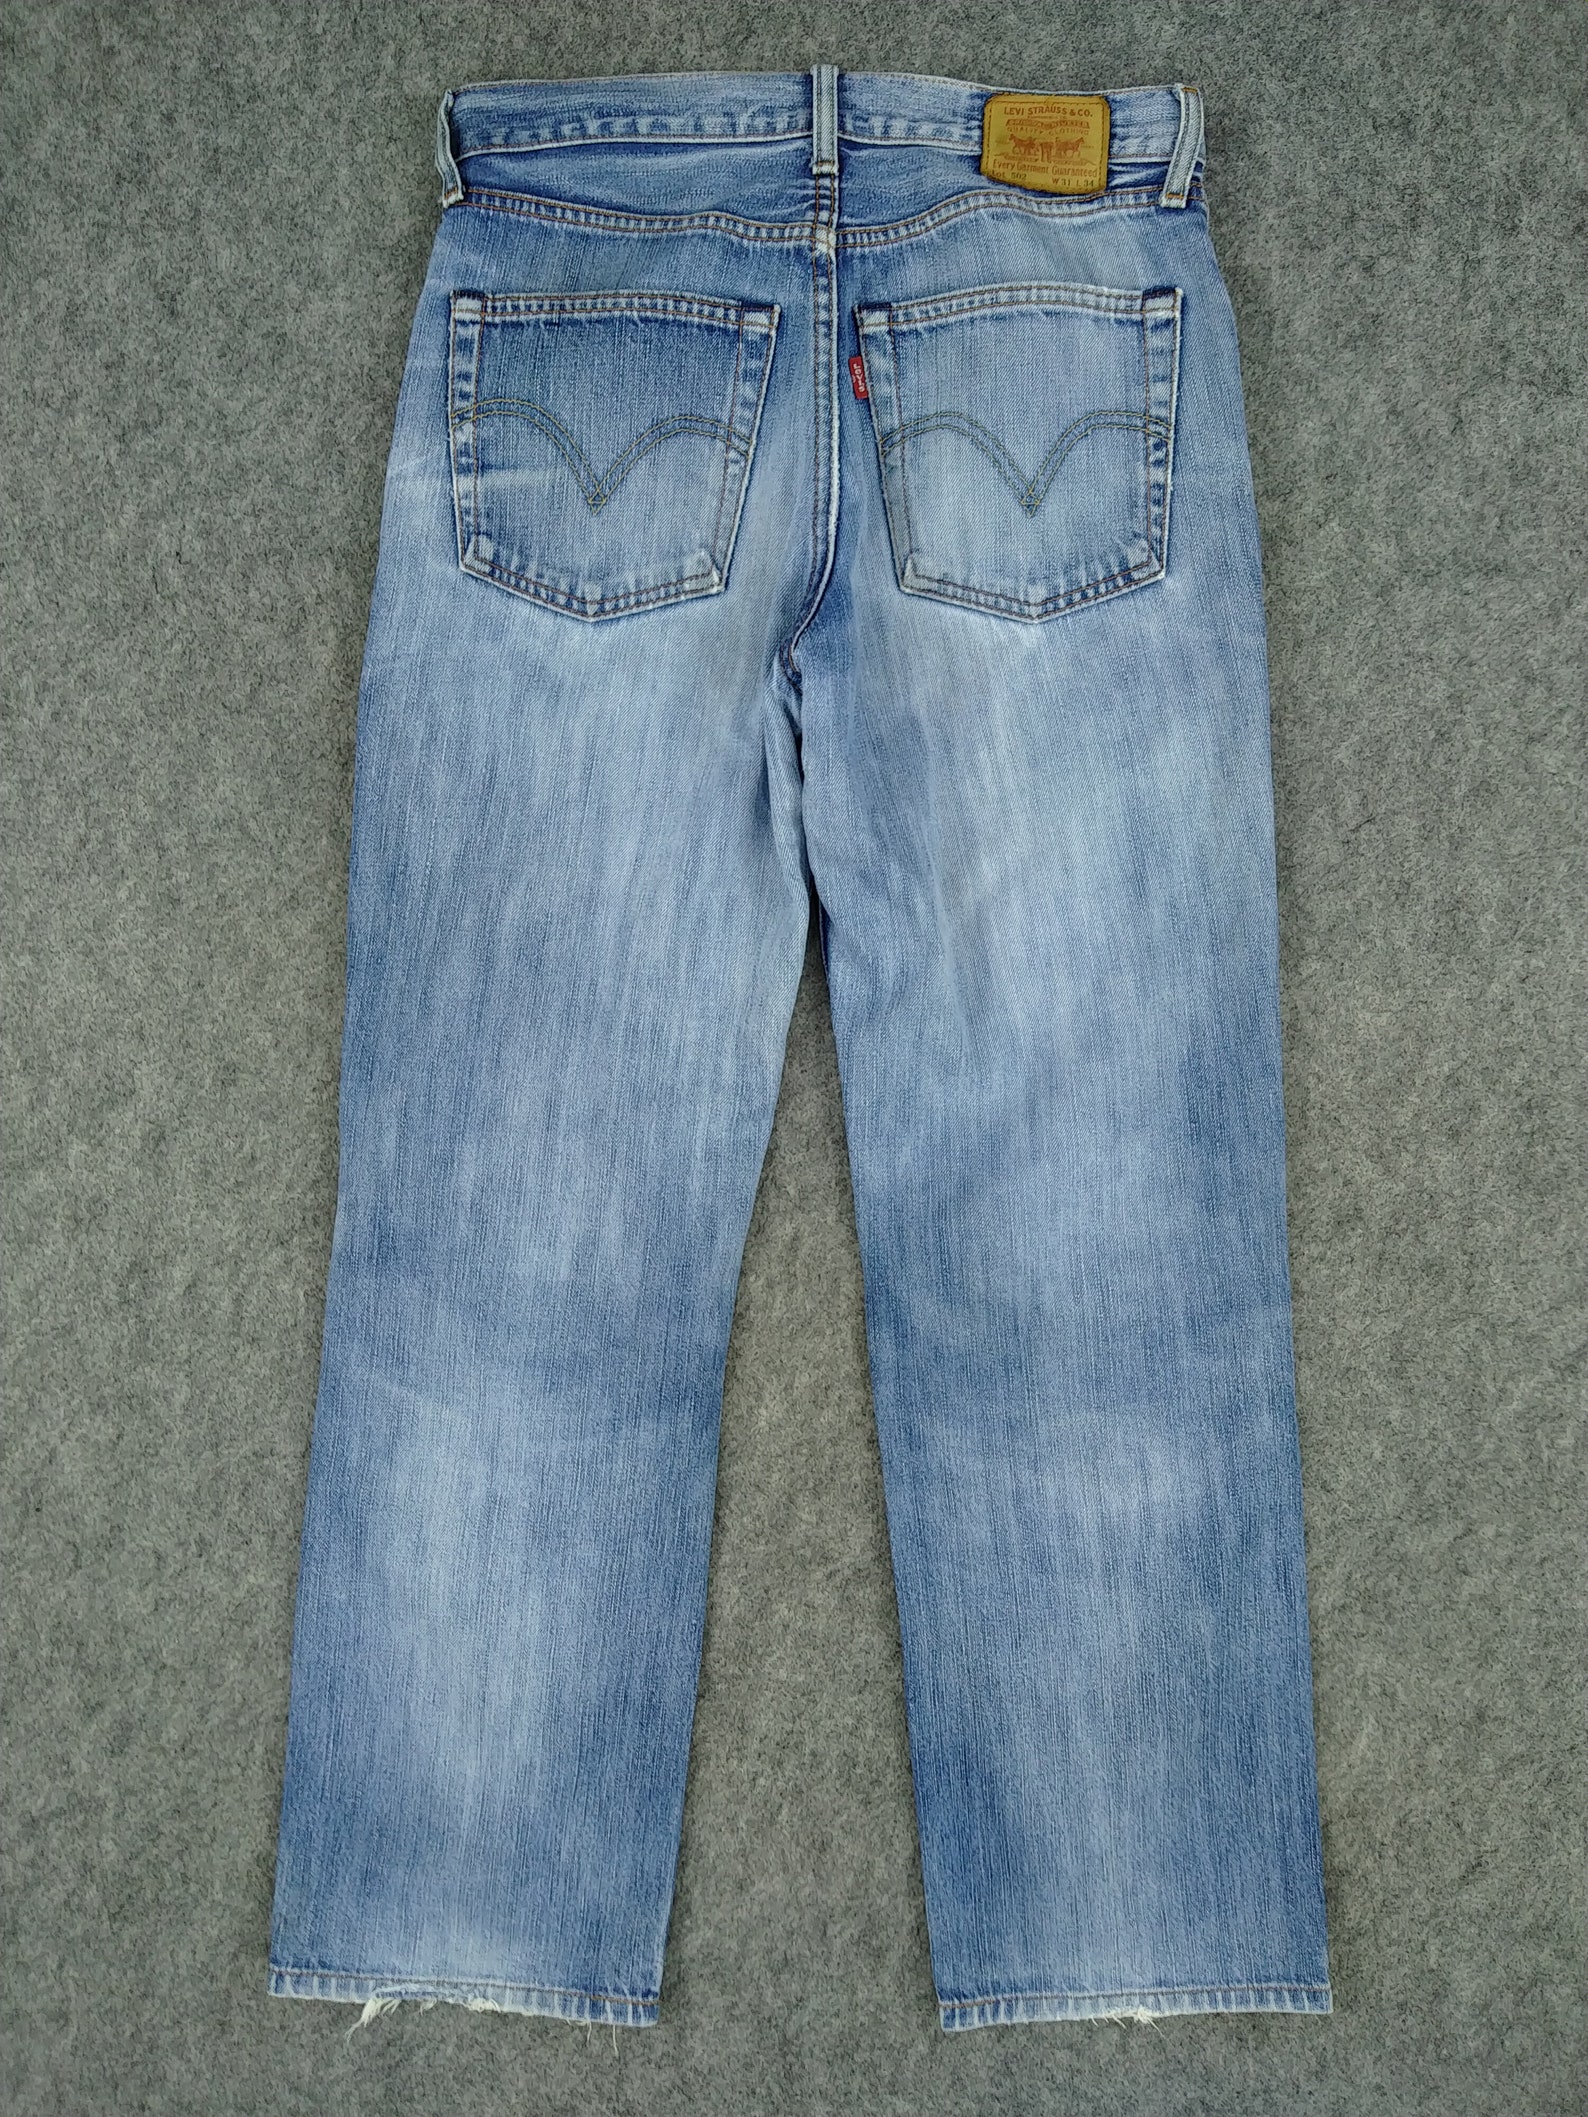 Vintage Levi's 502 Jeans 30x28 Light Wash Denim Red Tab | Etsy